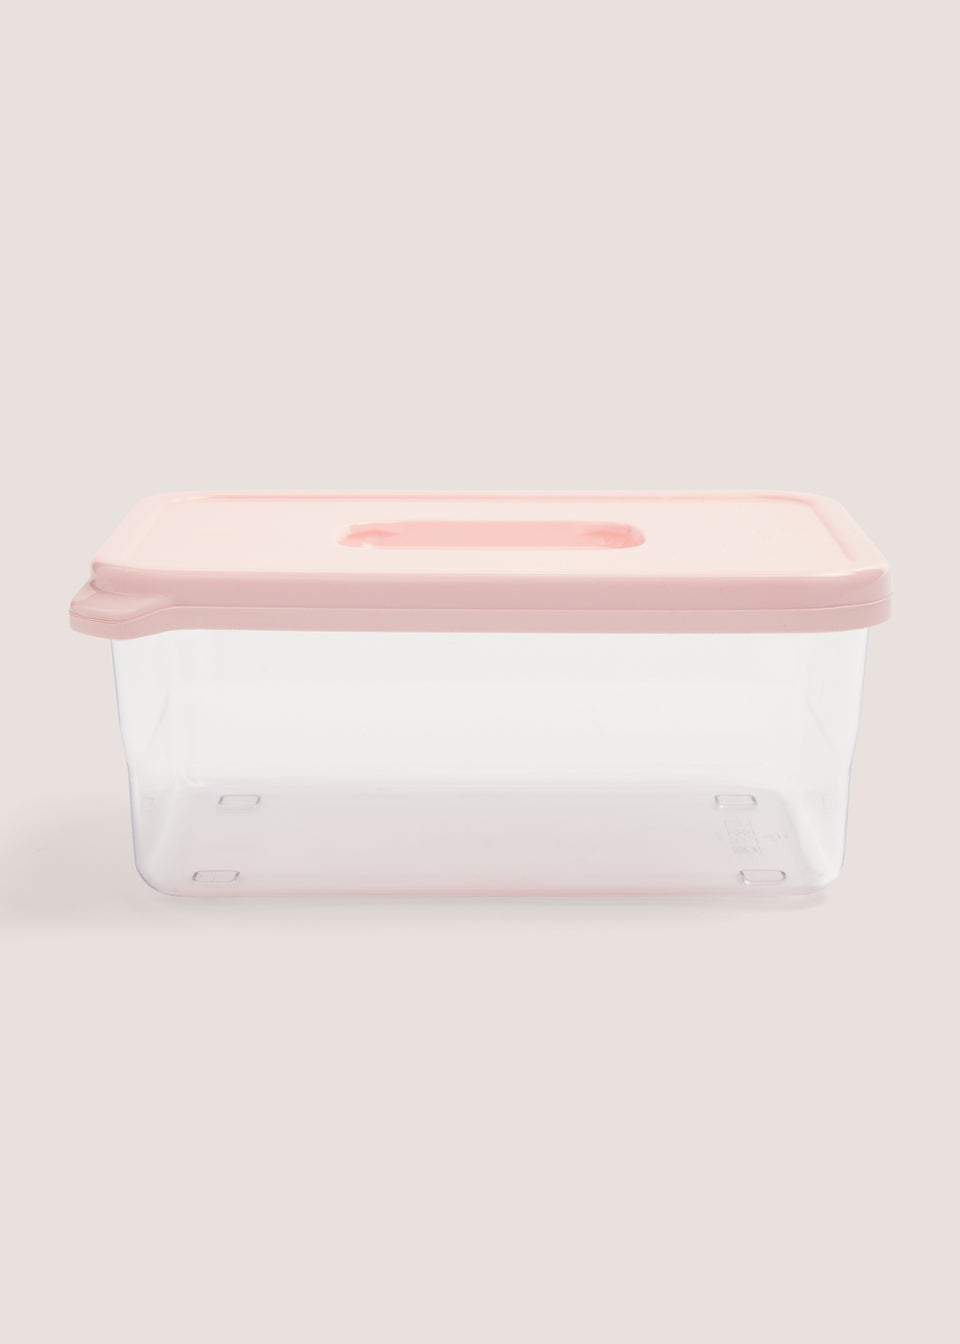 Pink Lunch Box (18cm x 12cm x 8cm)